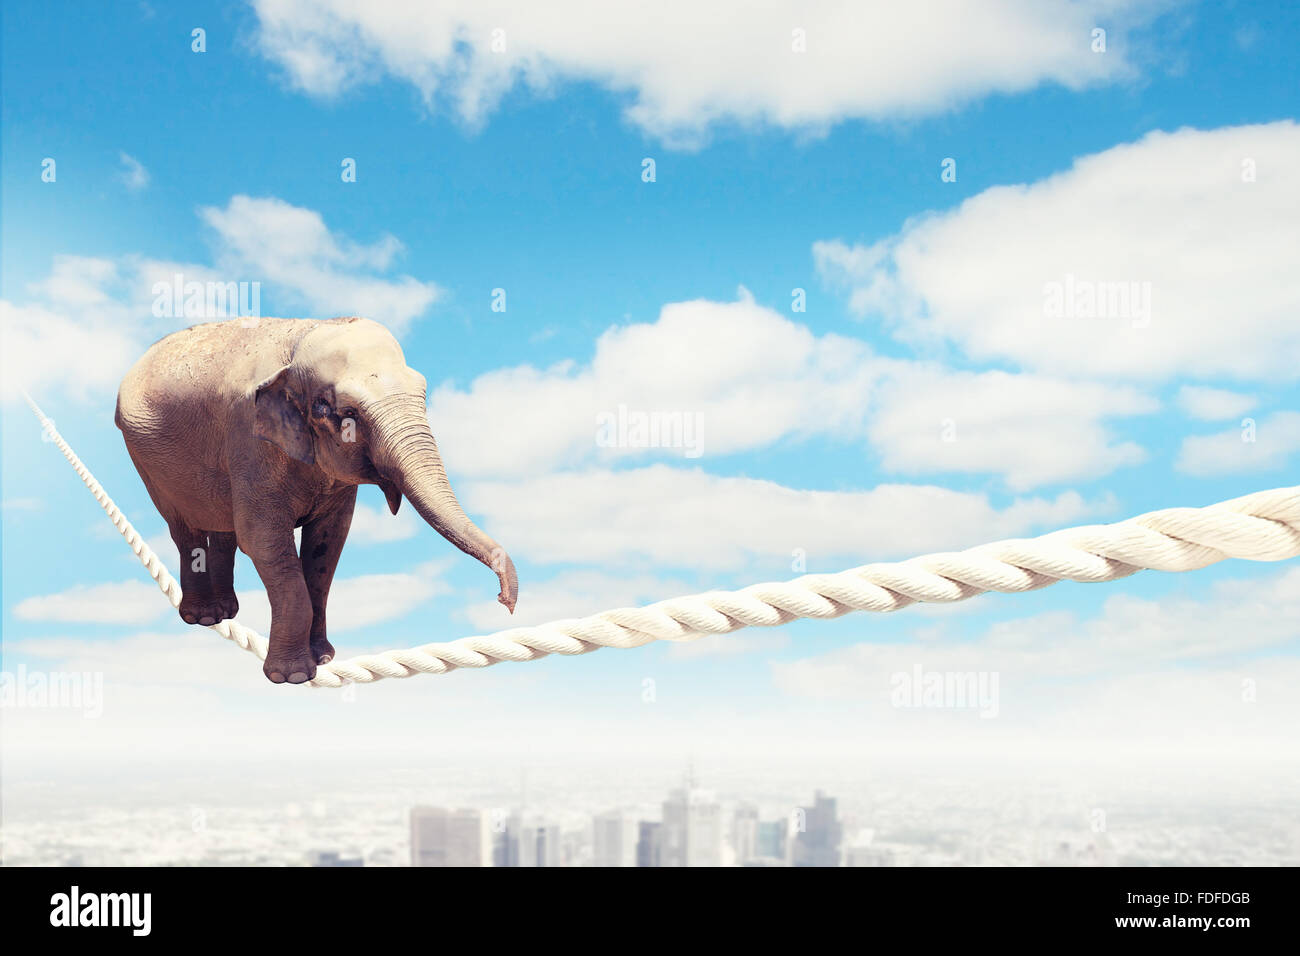 Elephant walking on rope -Fotos und -Bildmaterial in hoher Auflösung – Alamy